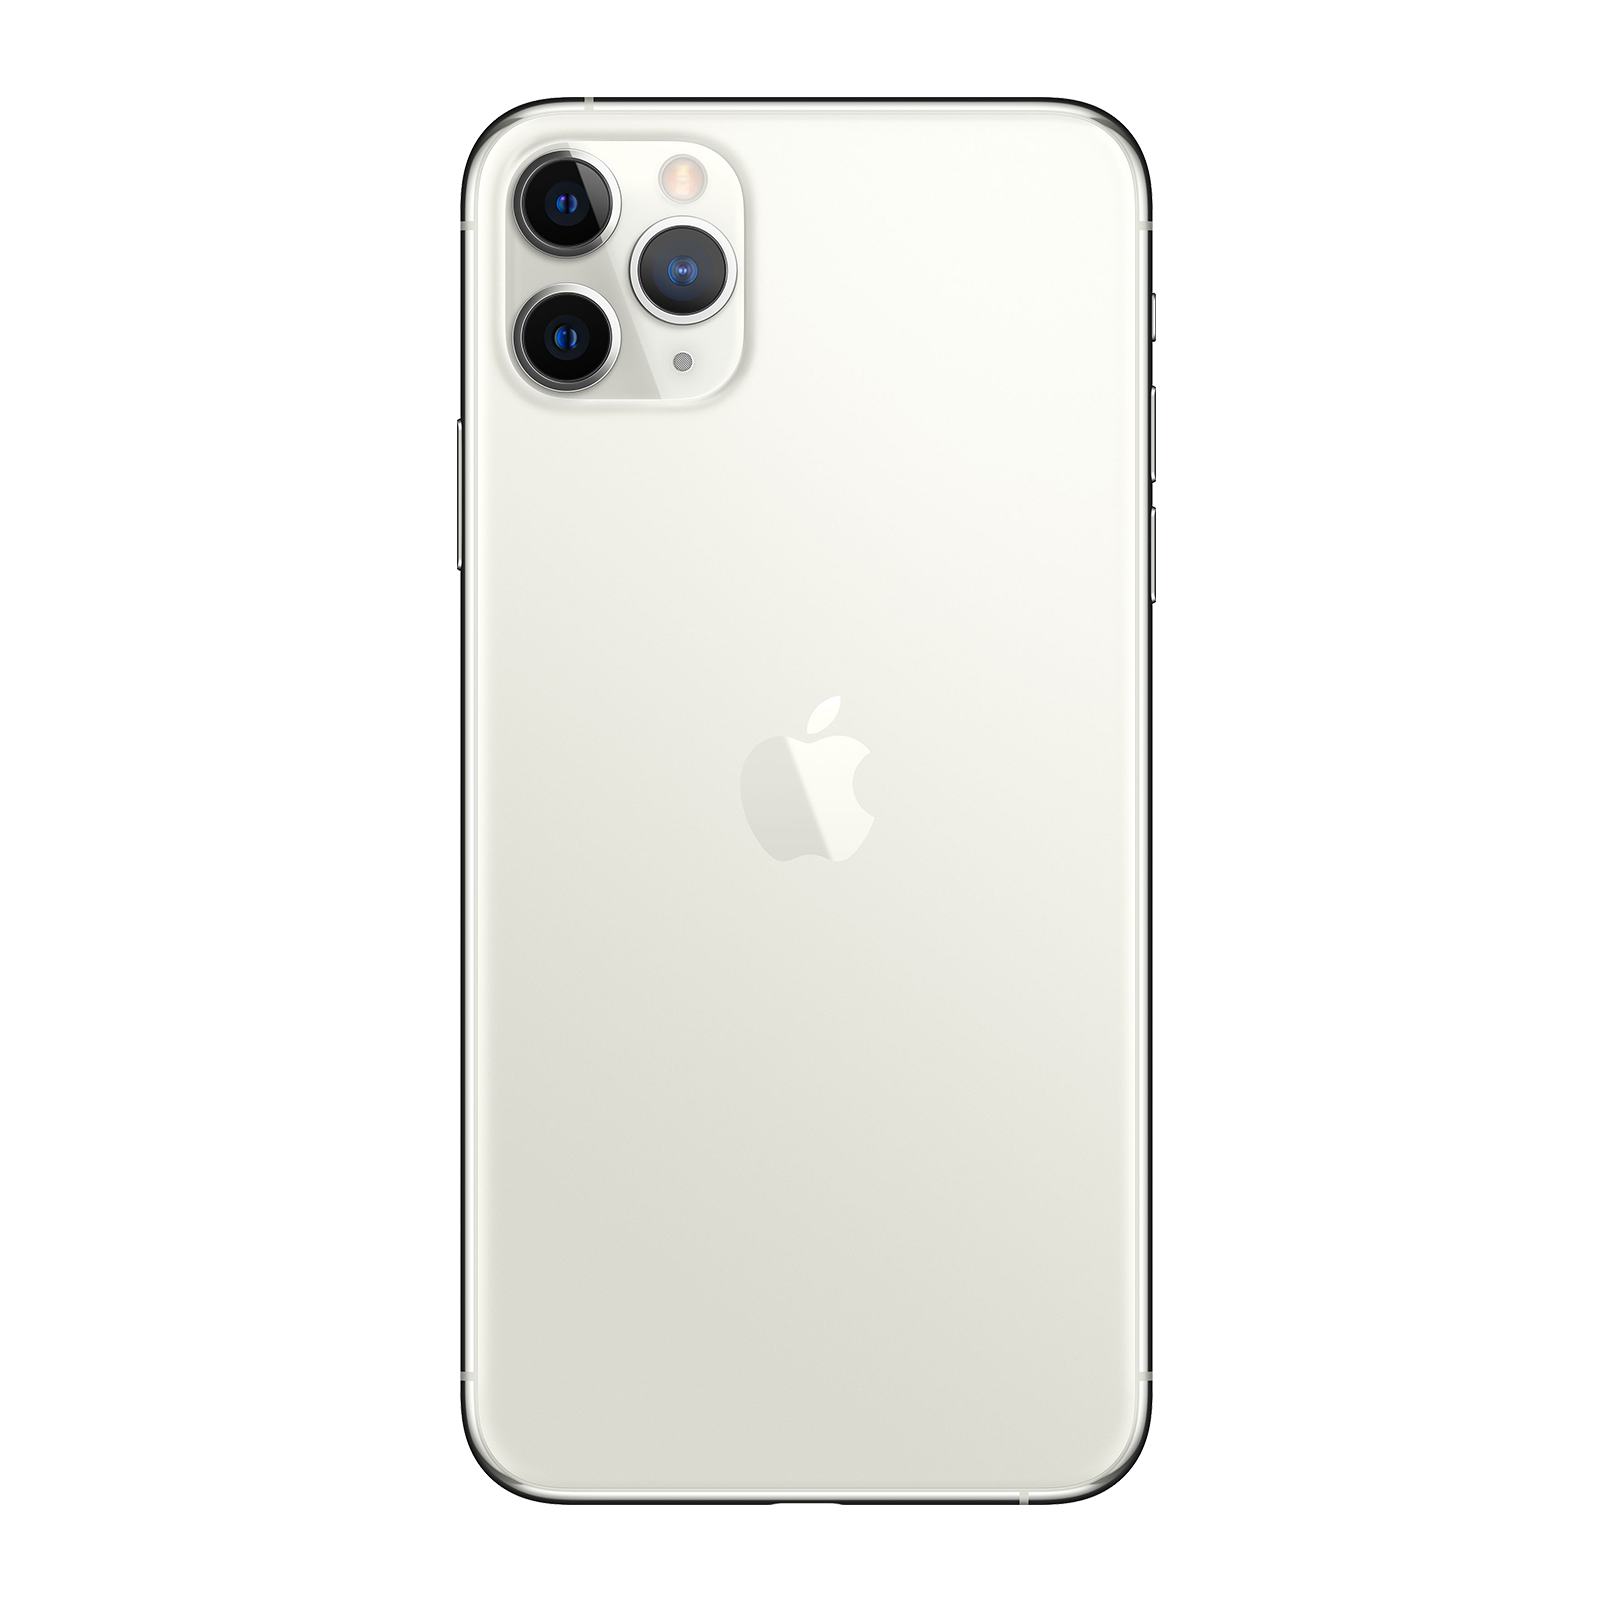 Apple iPhone 11 Pro 256GB Silver Good - Sprint